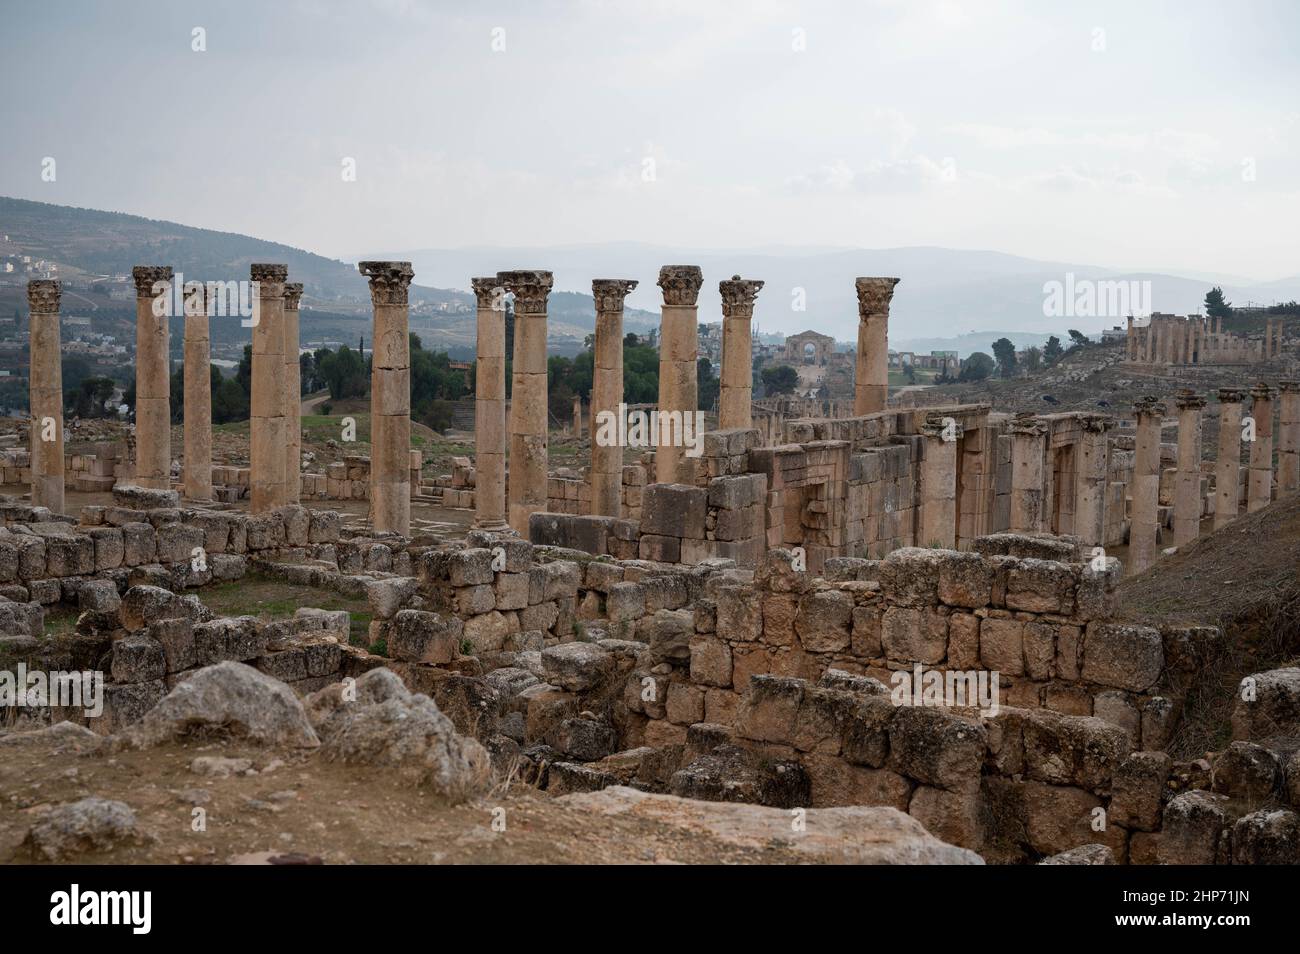 Columns and walls of a church in the ancient Roman city of Jerash, Jordan Stock Photo